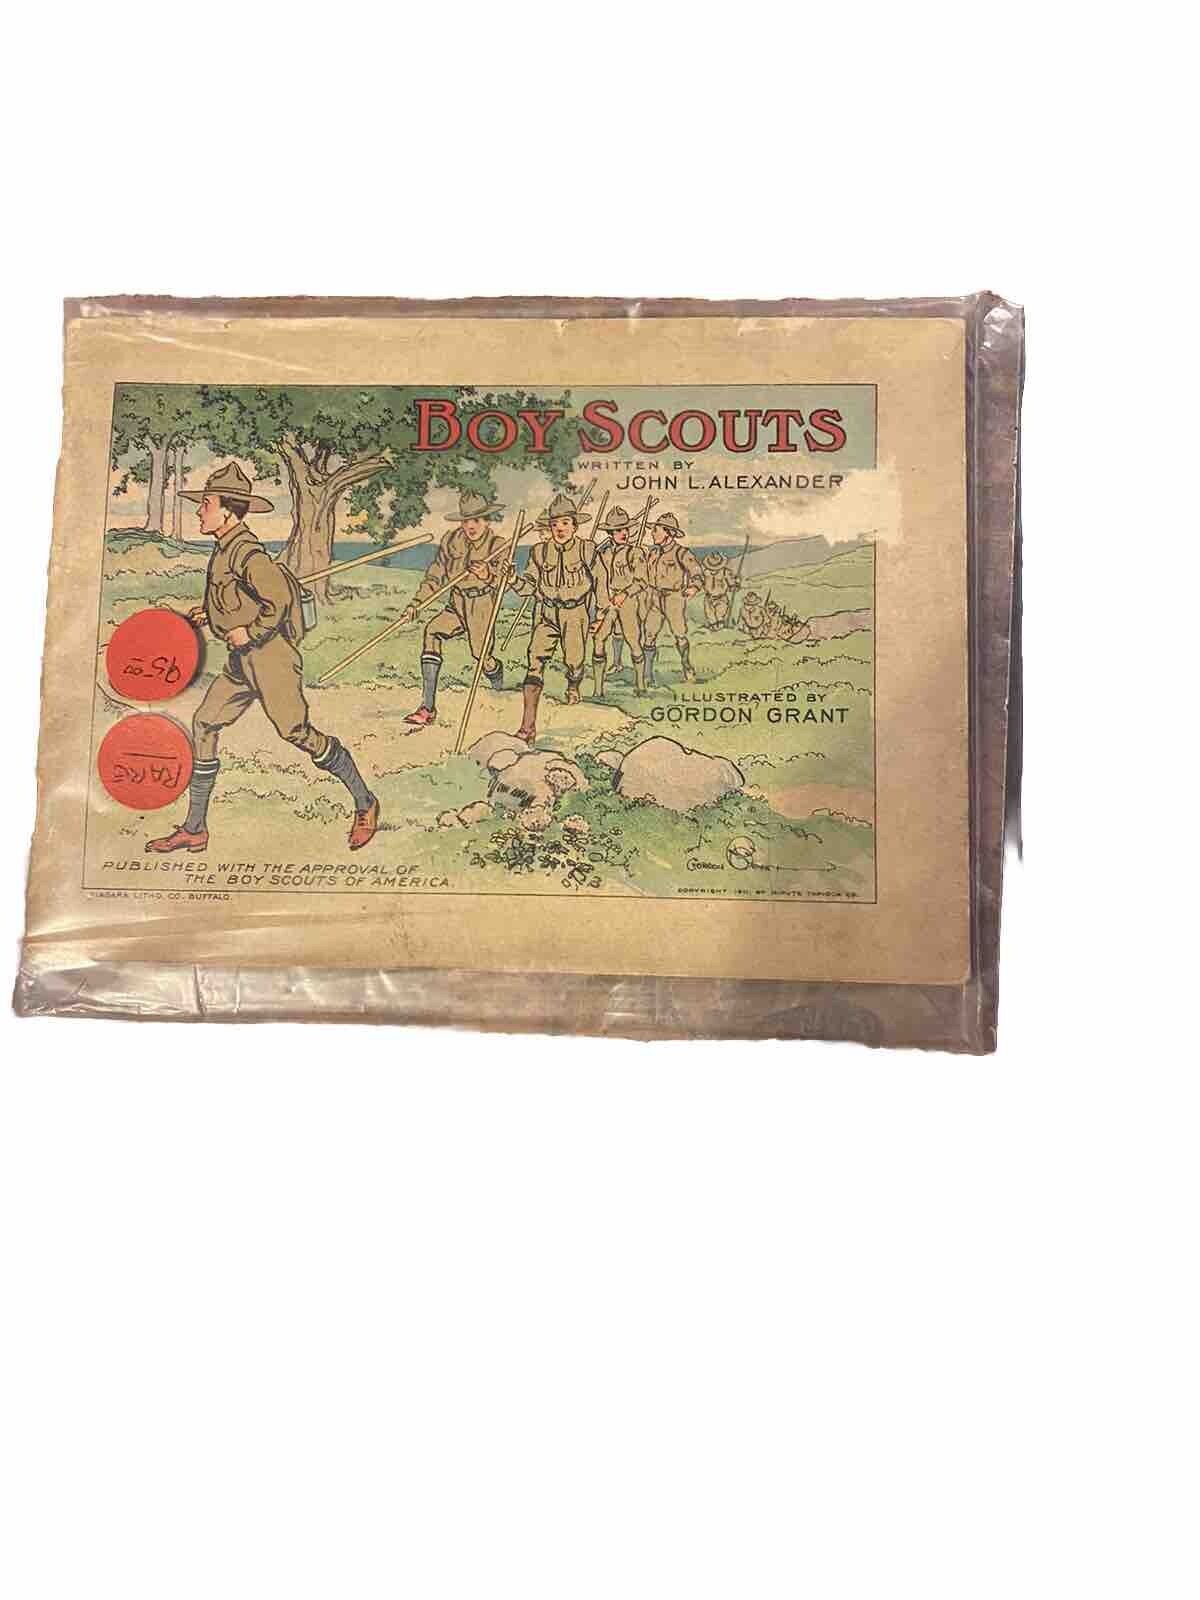 The Boy Scouts By John Alexander, Minute Tapioca Co.